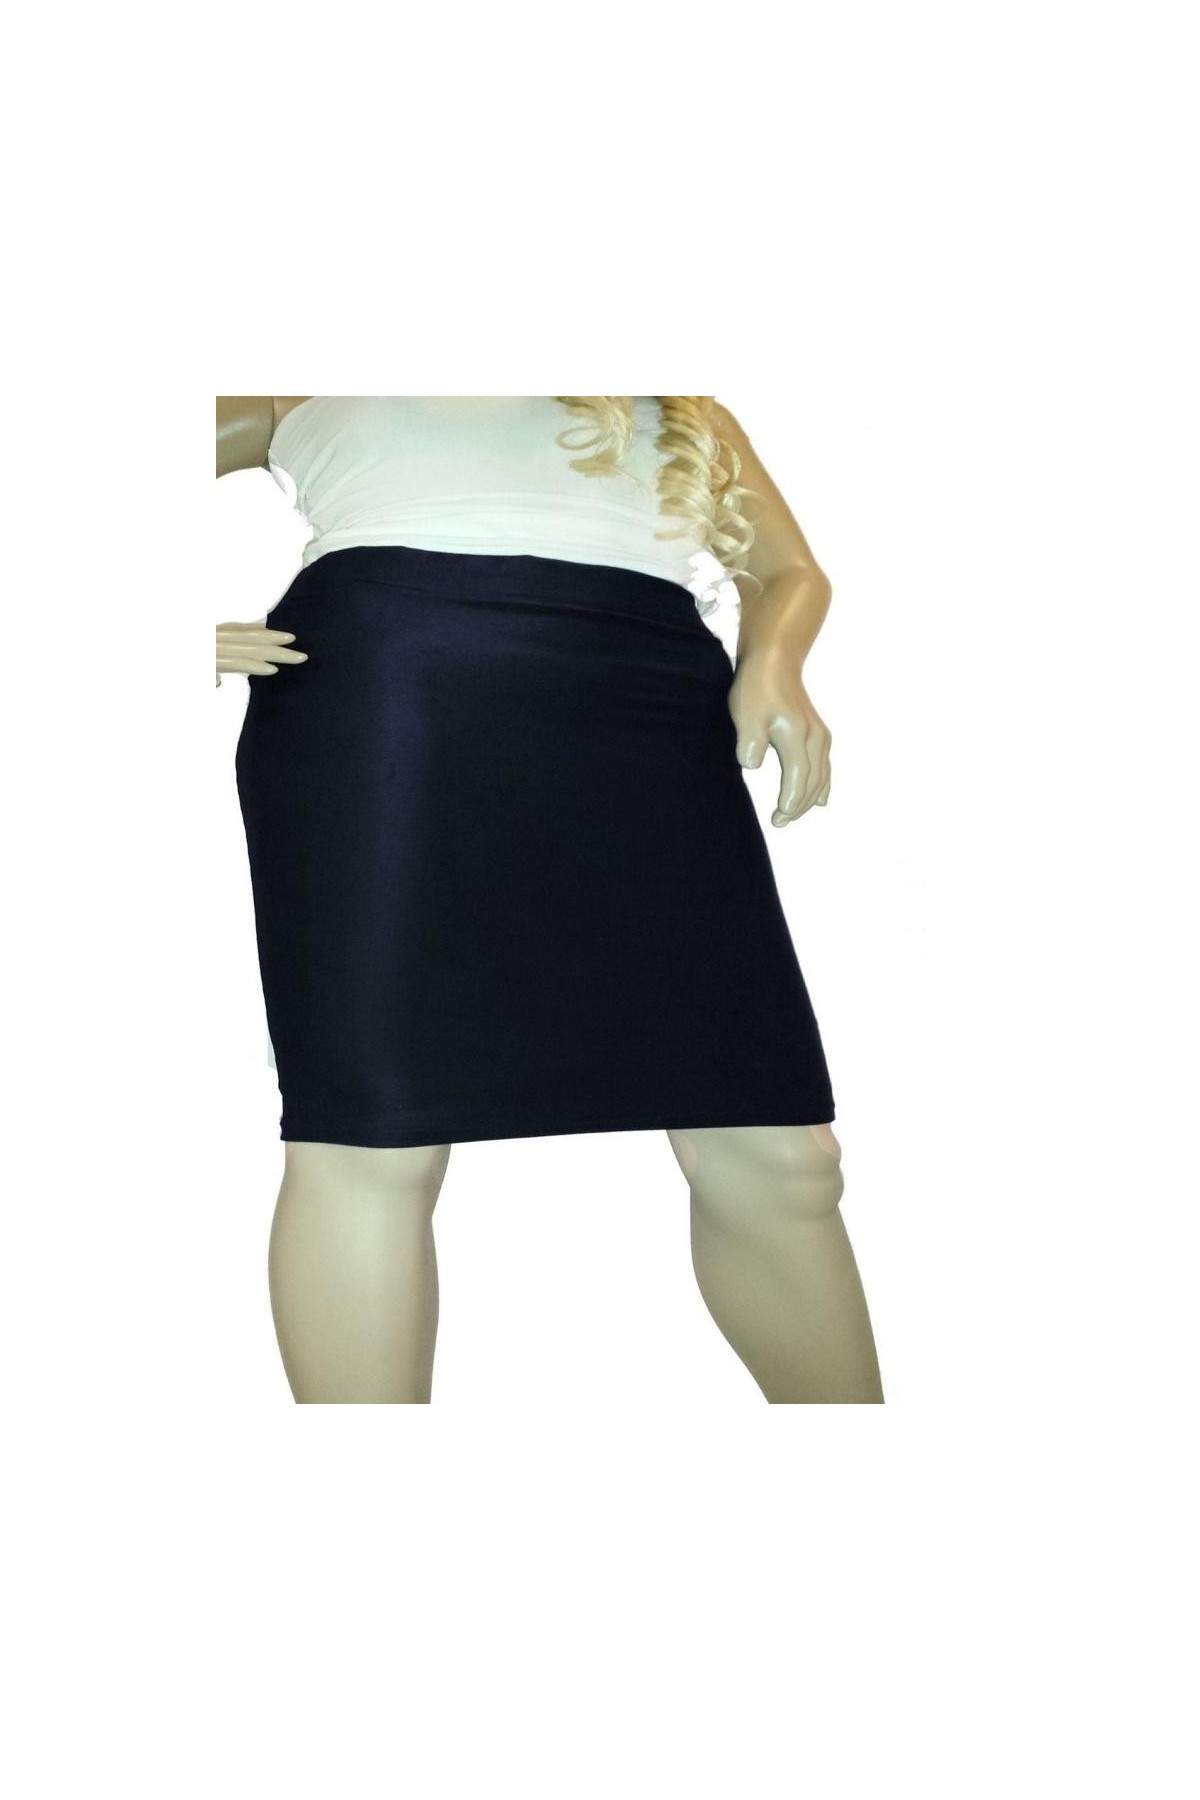 black week Save 15% Blue Pencil Skirt Stretch Sizes 44 - 52 Lengths... - 